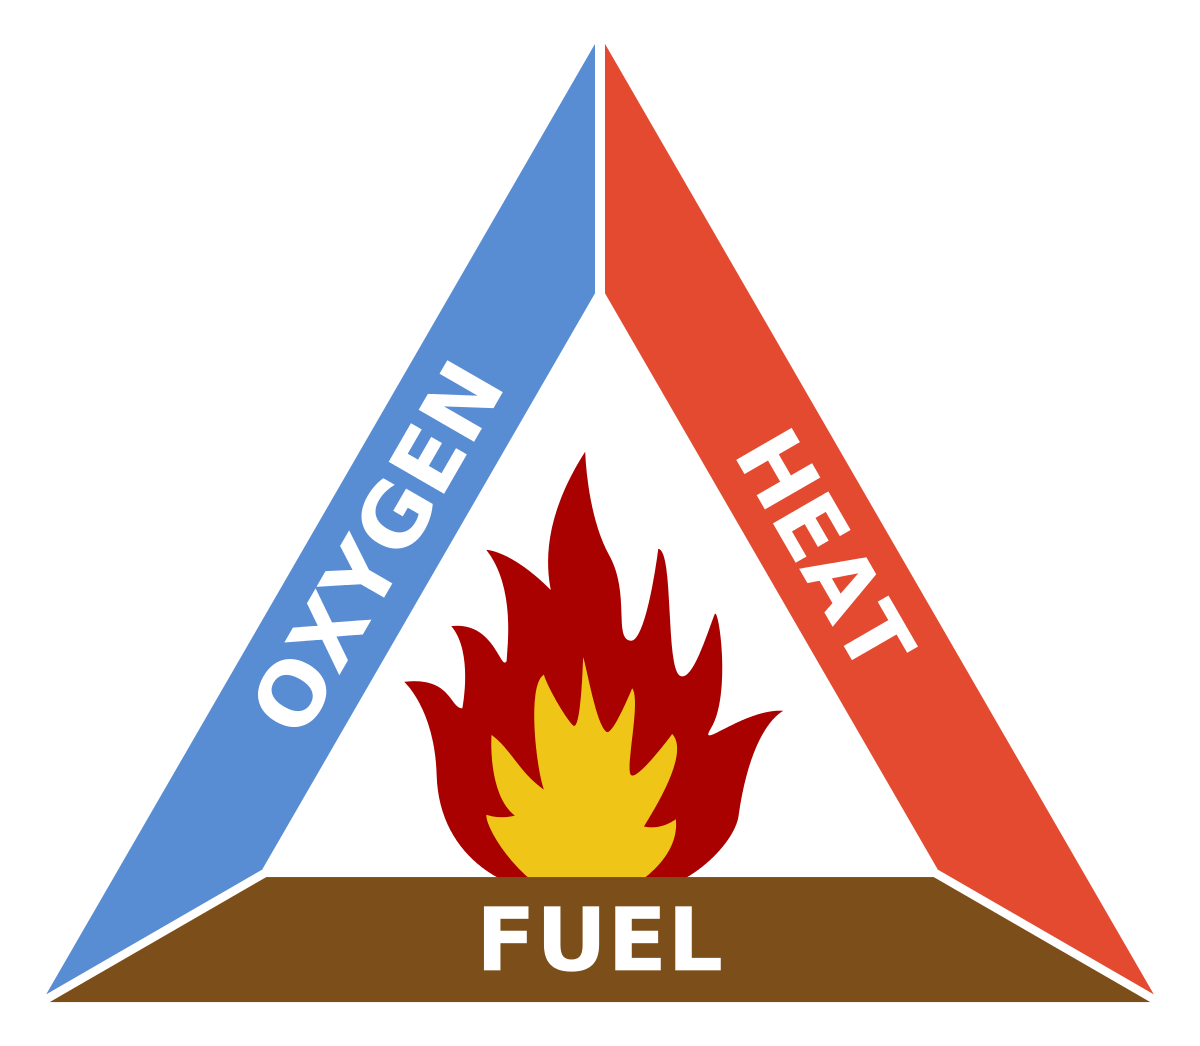 fire triangle illustration - oxygen heat fuel